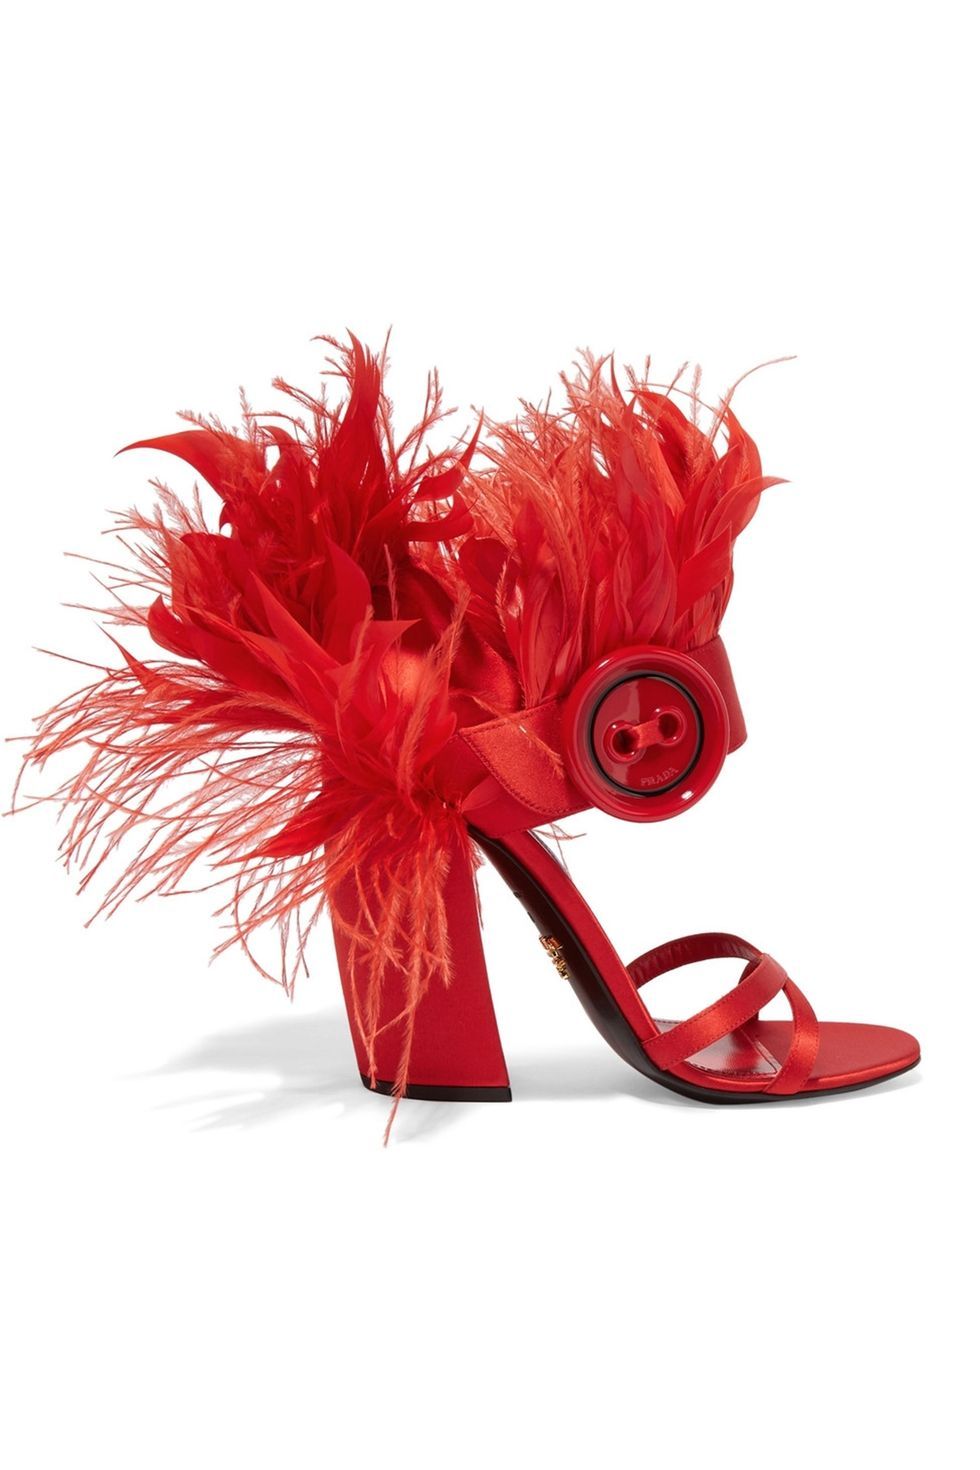 Red, Footwear, Feather, High heels, Pink, Shoe, Cut flowers, Flower, Costume accessory, Sandal, 